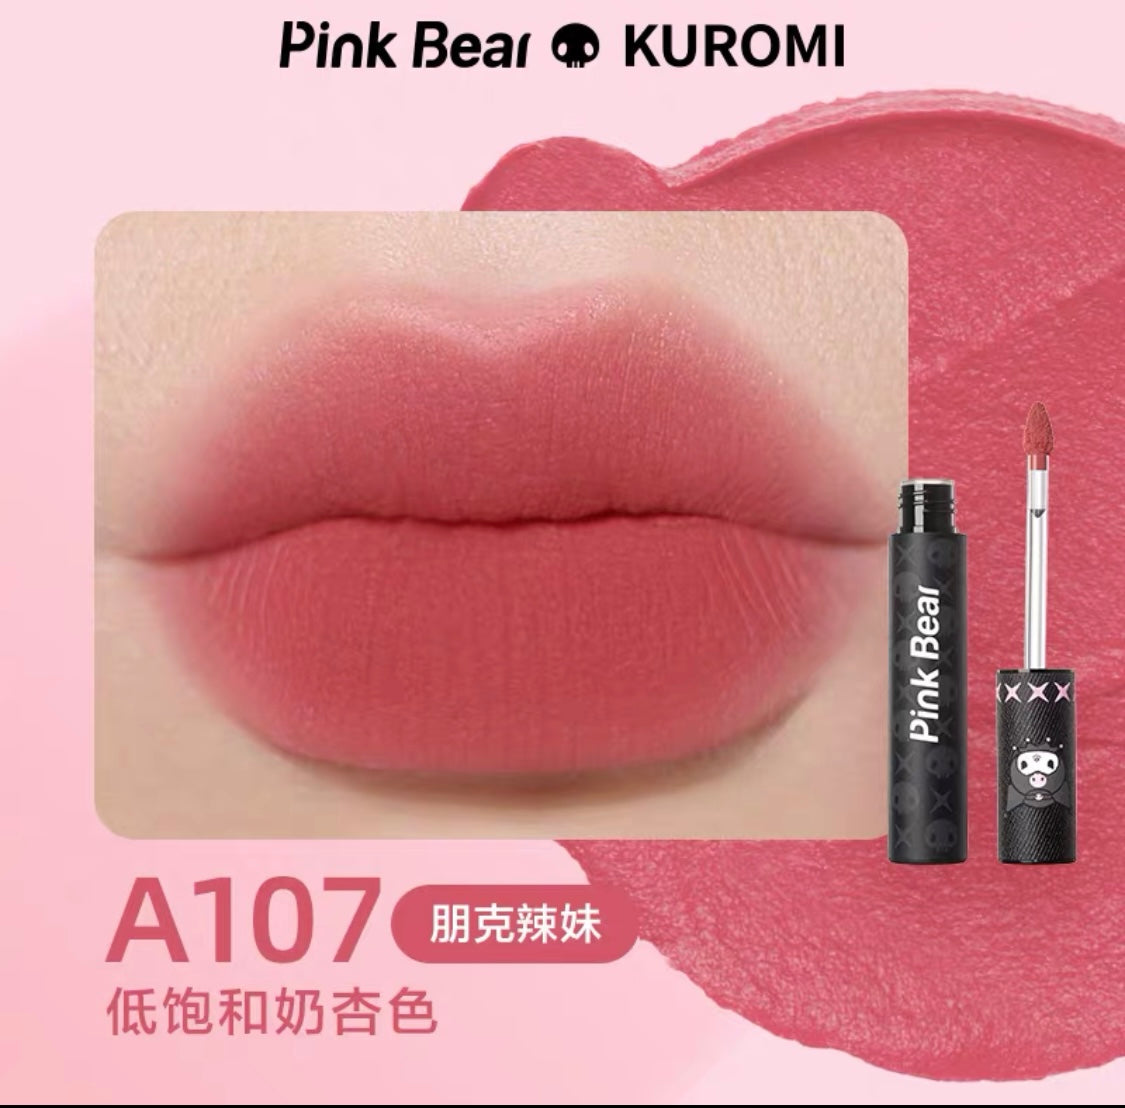 Kuromi / my melody pink bear makeup lip product lip stain or lip mud / eyeshadow